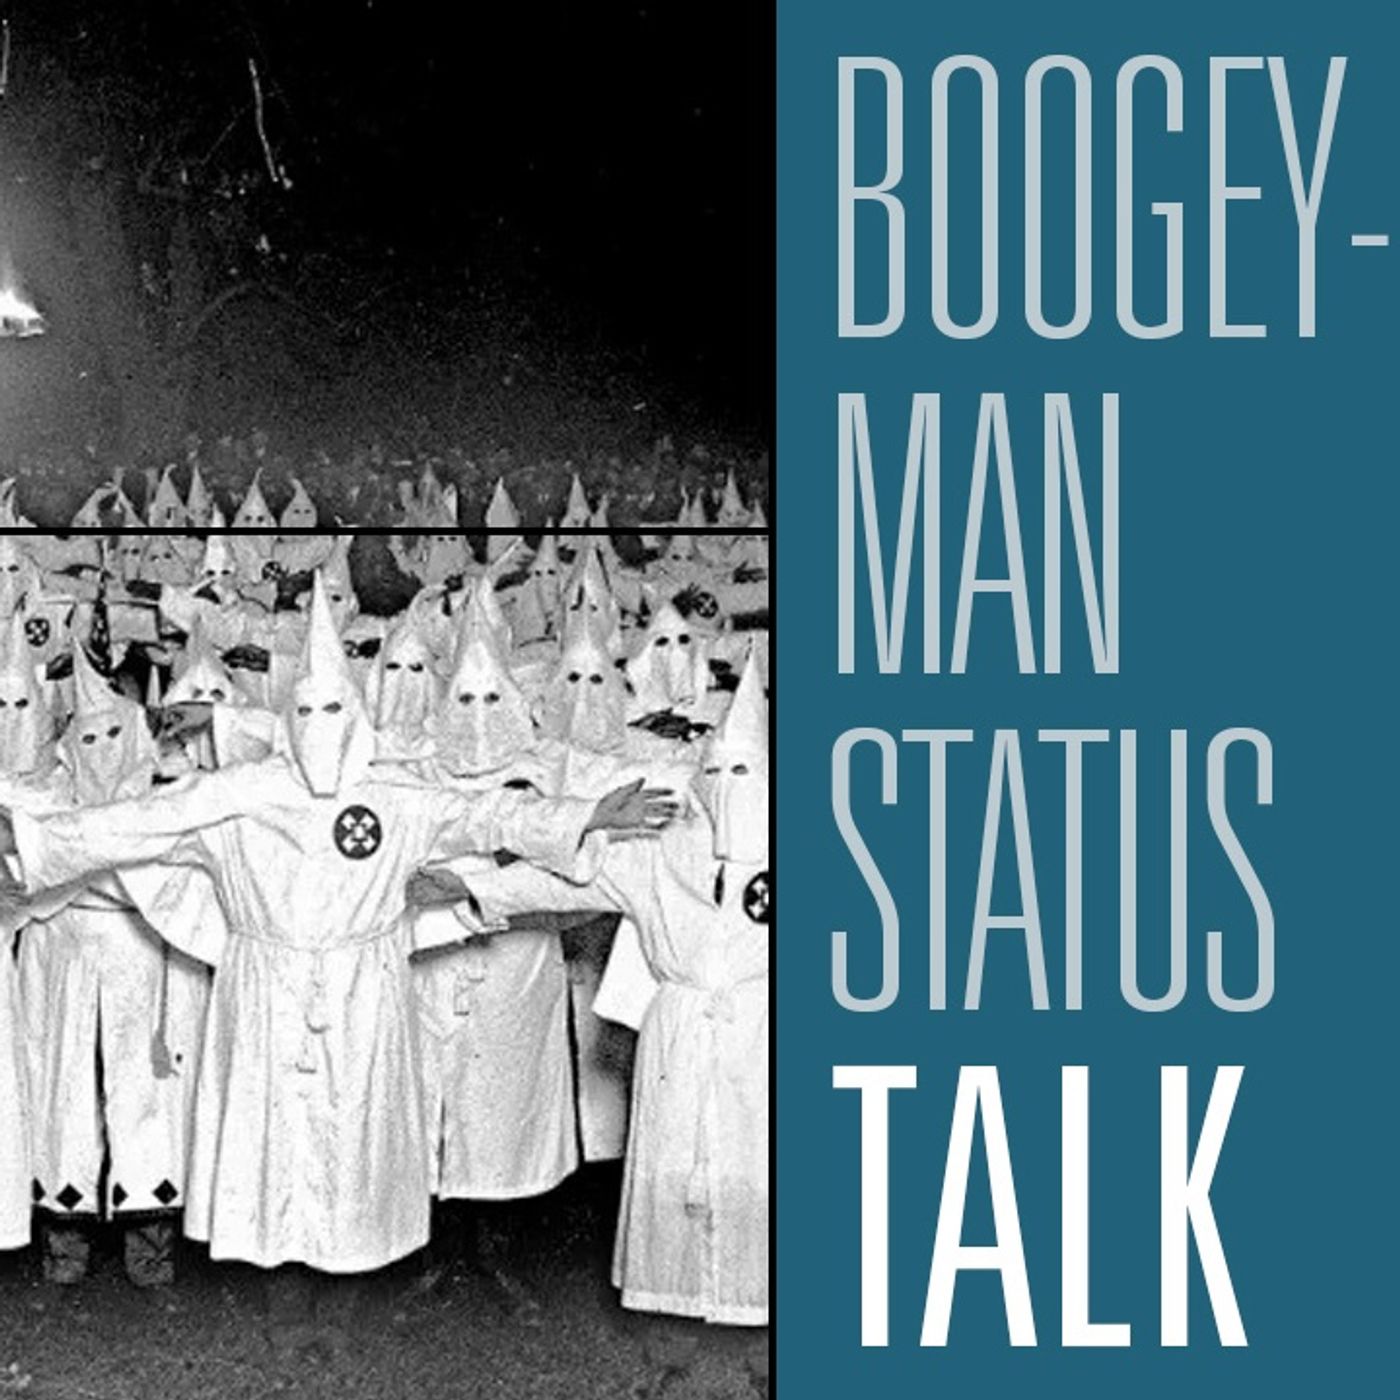 How wrongthink boogeyman status is used against men | HBR Talk 216